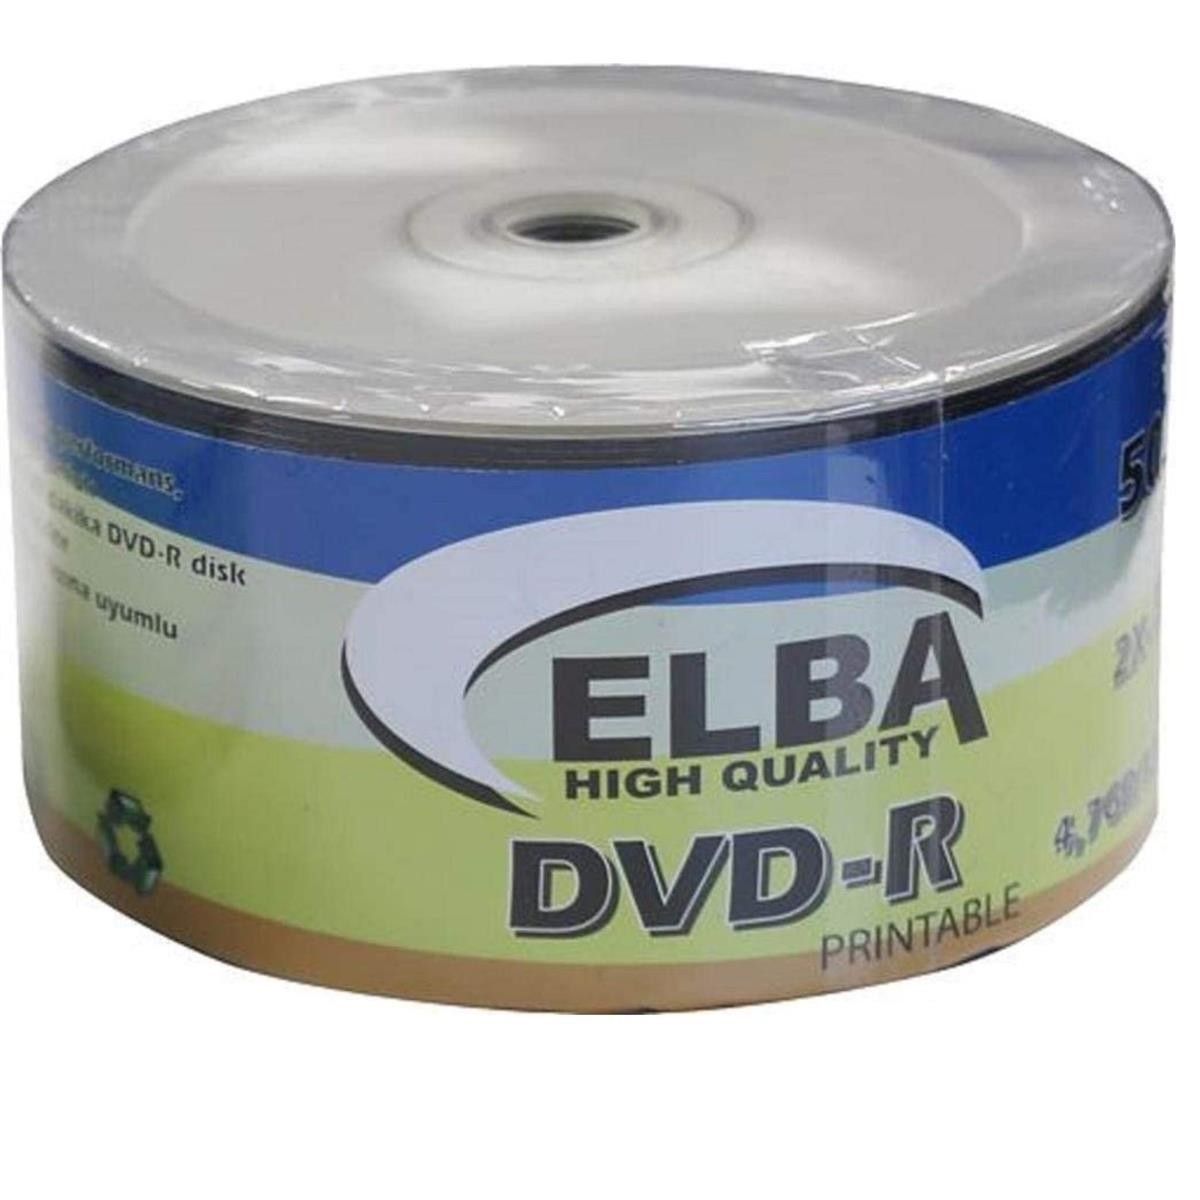 Elba 16x DVD-R 4.7 Gb 50 lik Paket